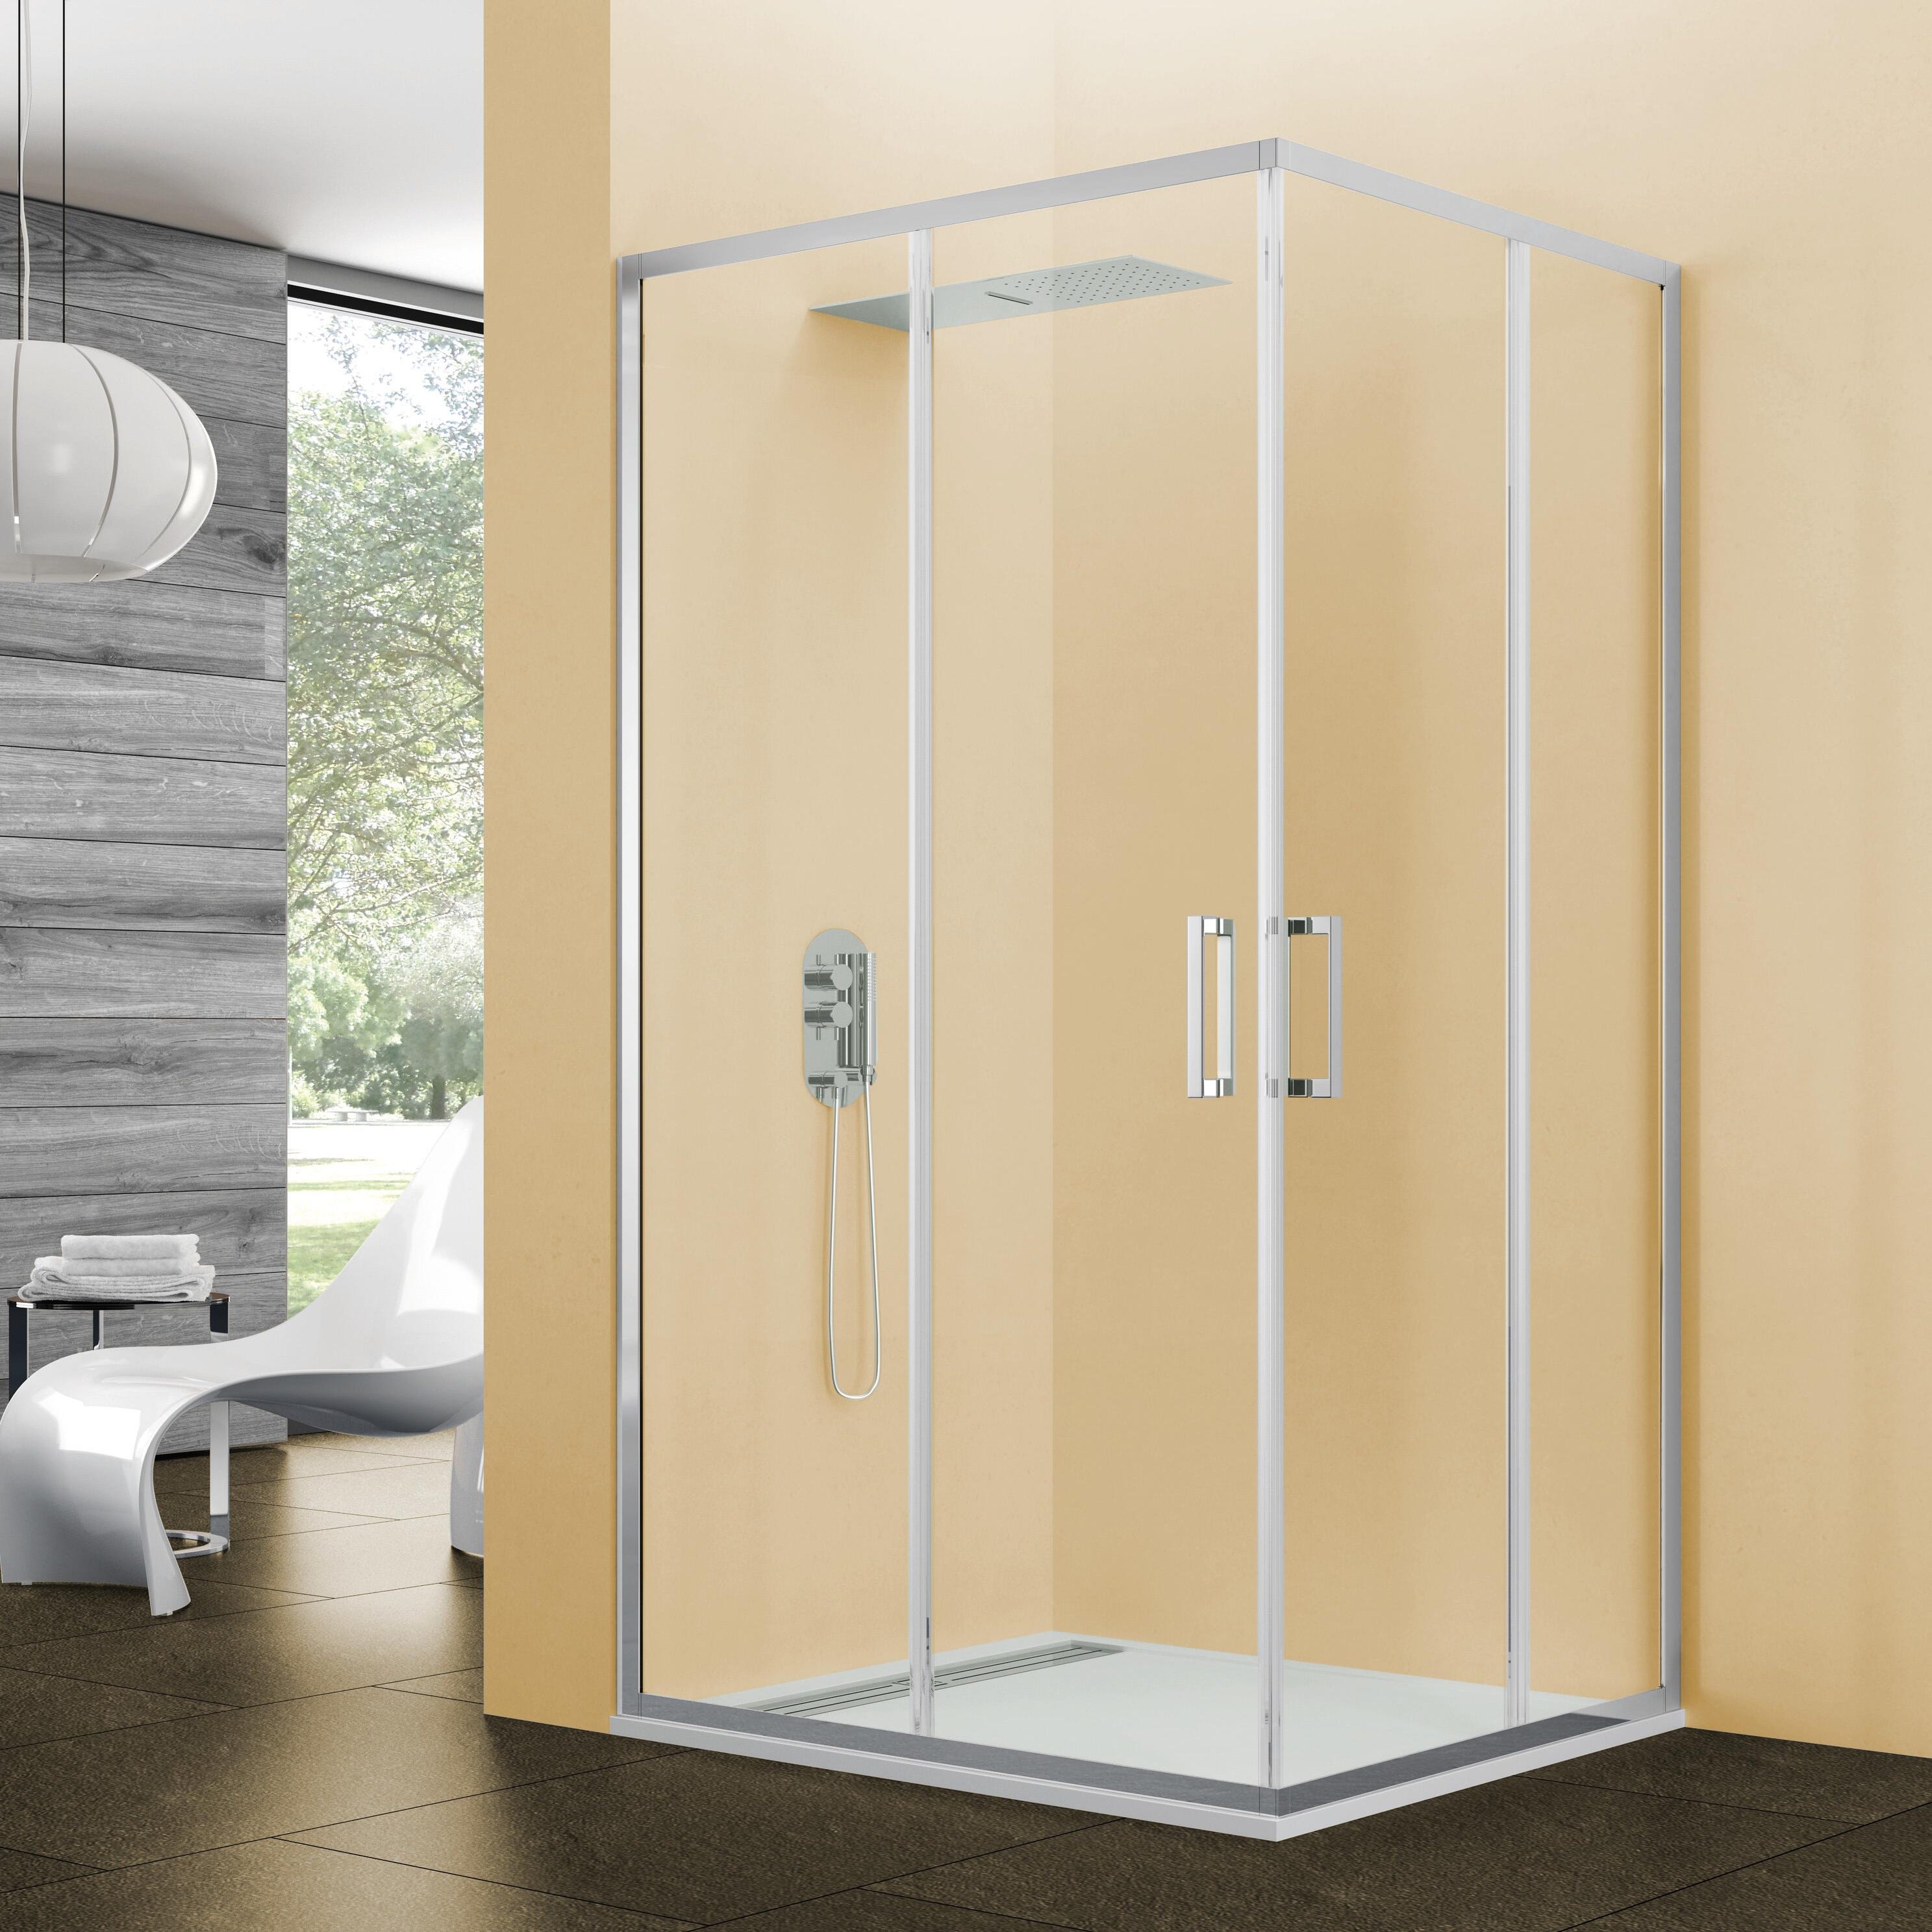 Mampara ducha rectangular corredera, 80x90x195 cm, vidrio de seguridad 6  mm. transparente con anti-cal, perfil cromado brillo.Reversible